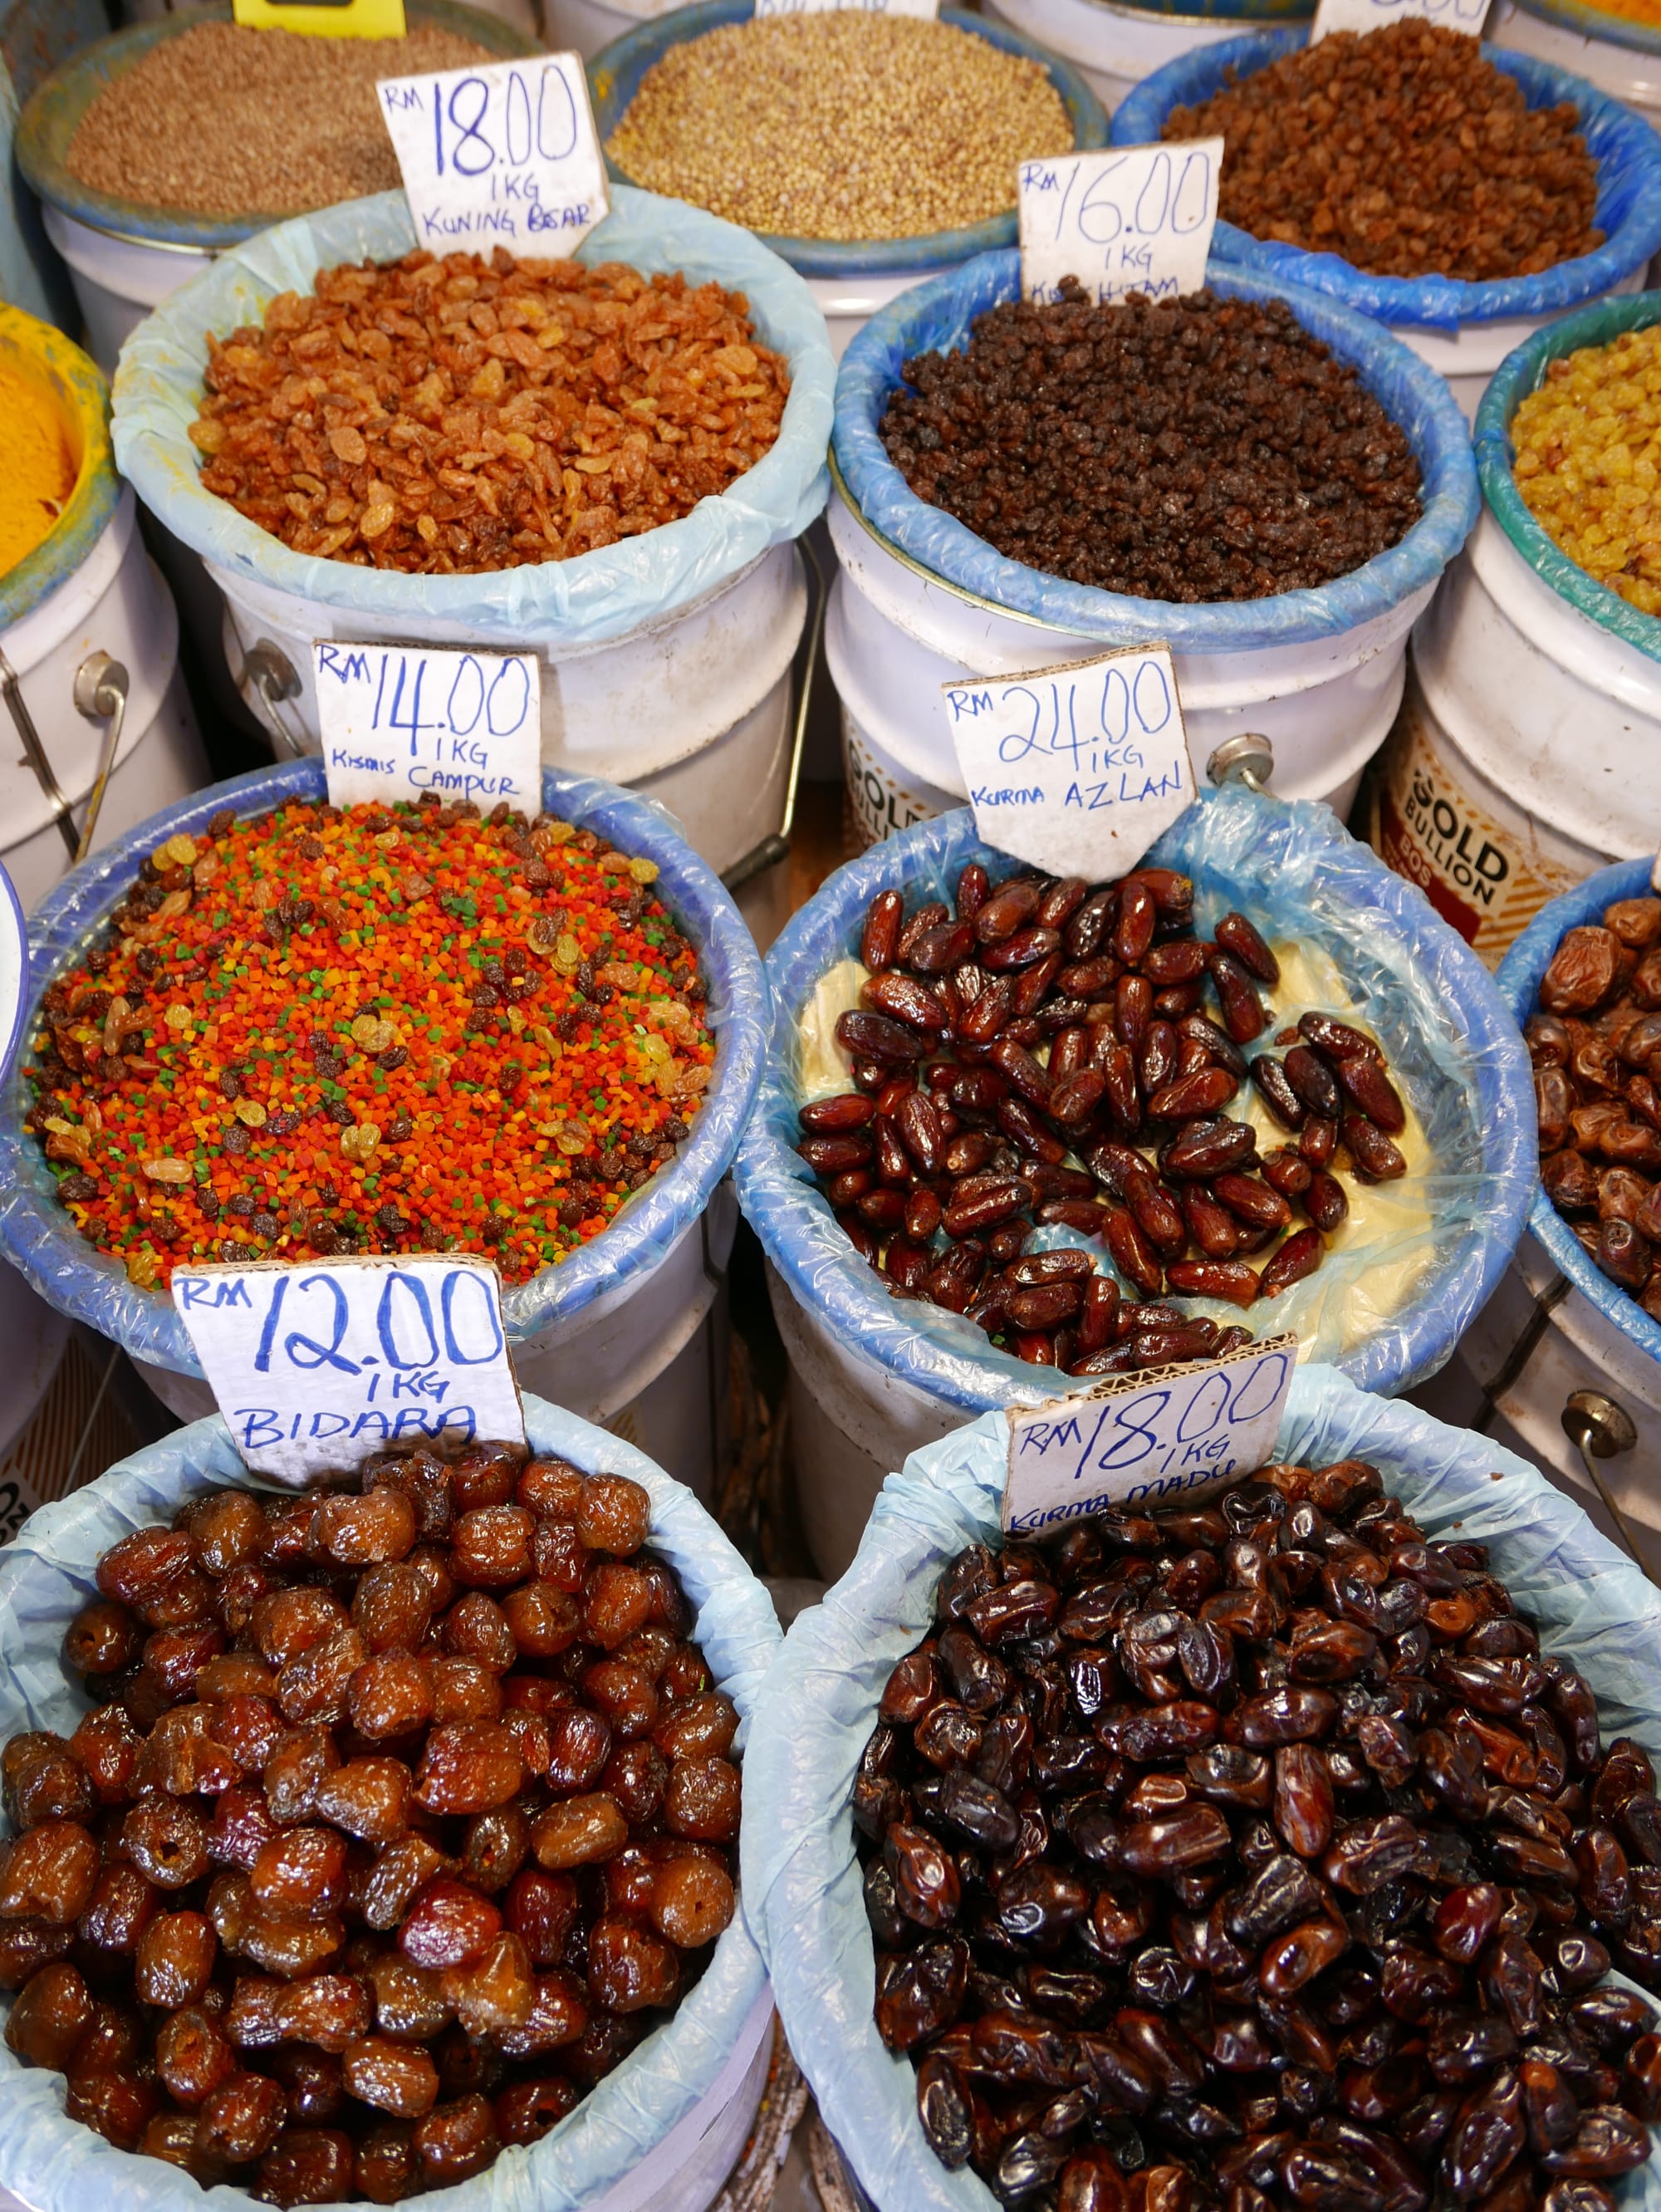 Photo by Author — dates and dried fruits — shops near India Street, Kuching, Sarawak, Malaysia